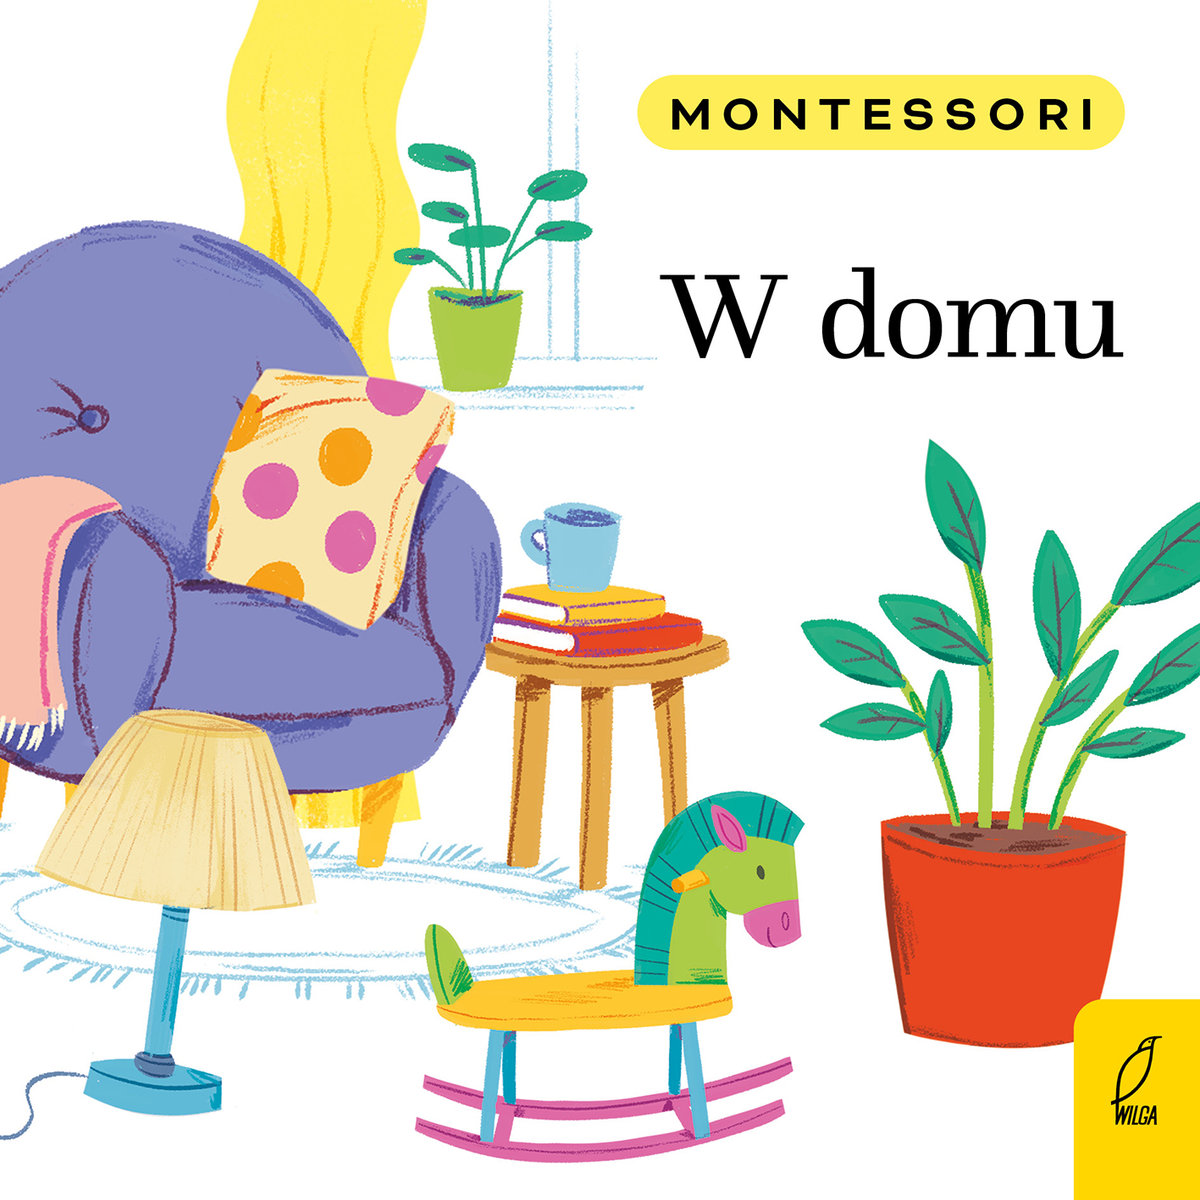 Montessori W domu by . 